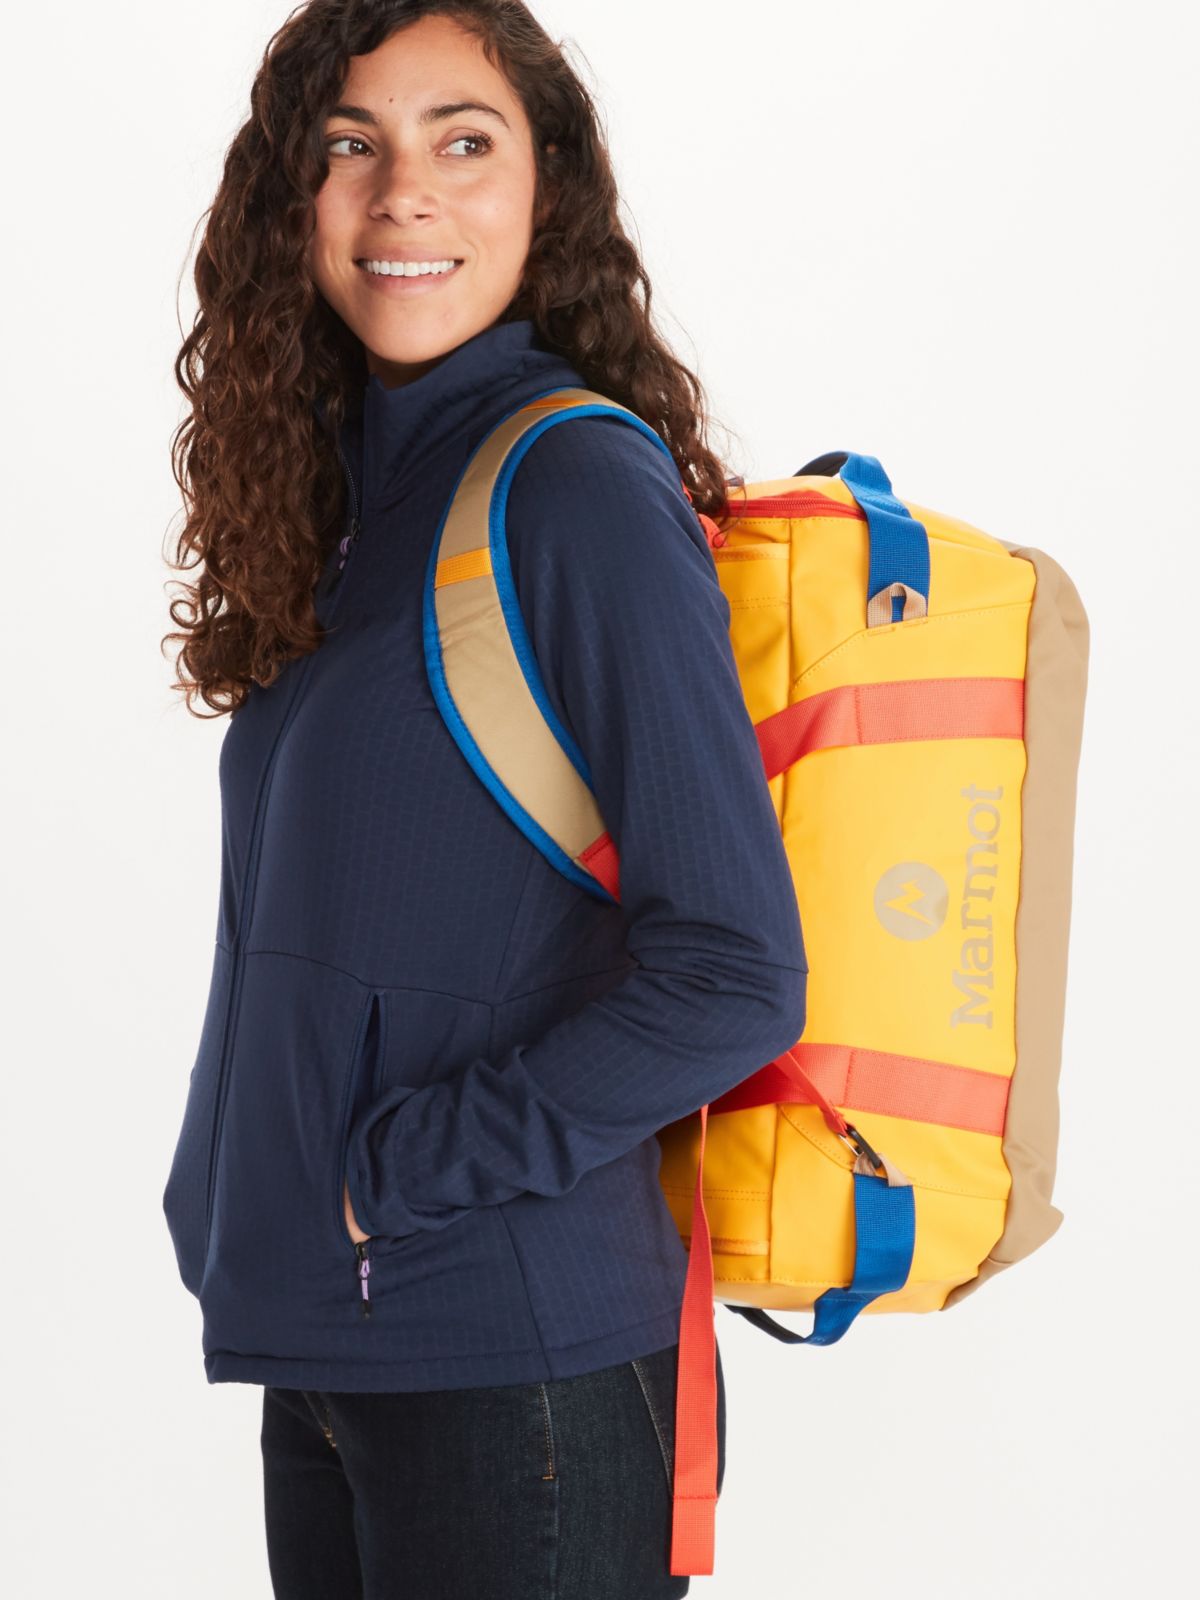 woman carrying long hauler duffle bag as a backpack